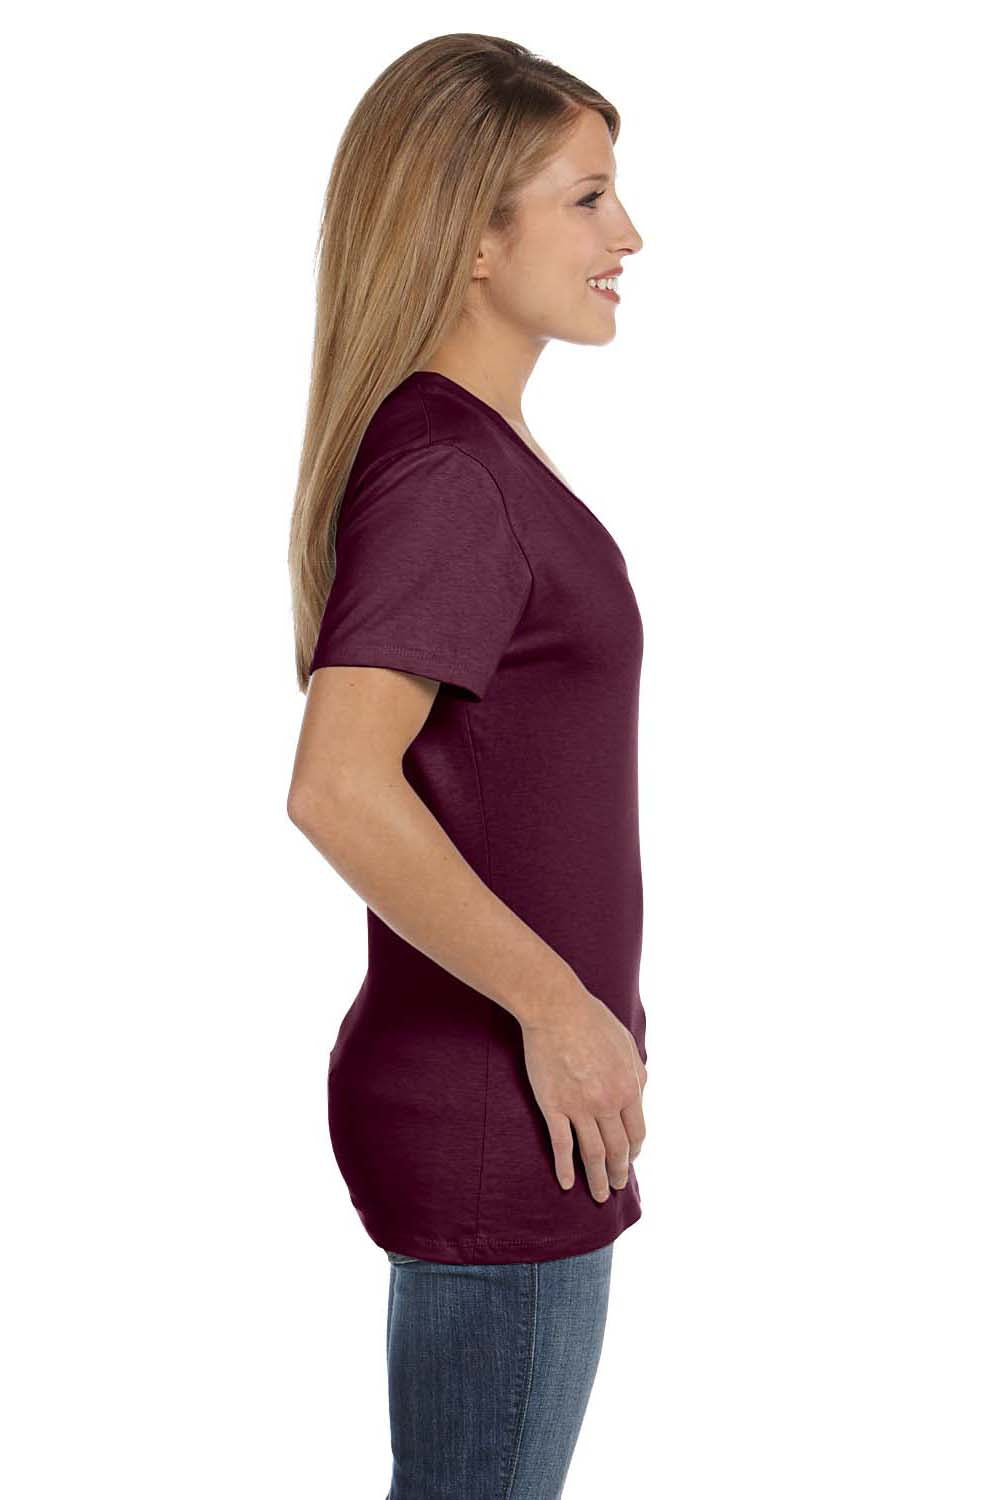 Hanes S04V Womens Nano-T Short Sleeve V-Neck T-Shirt Maroon Side